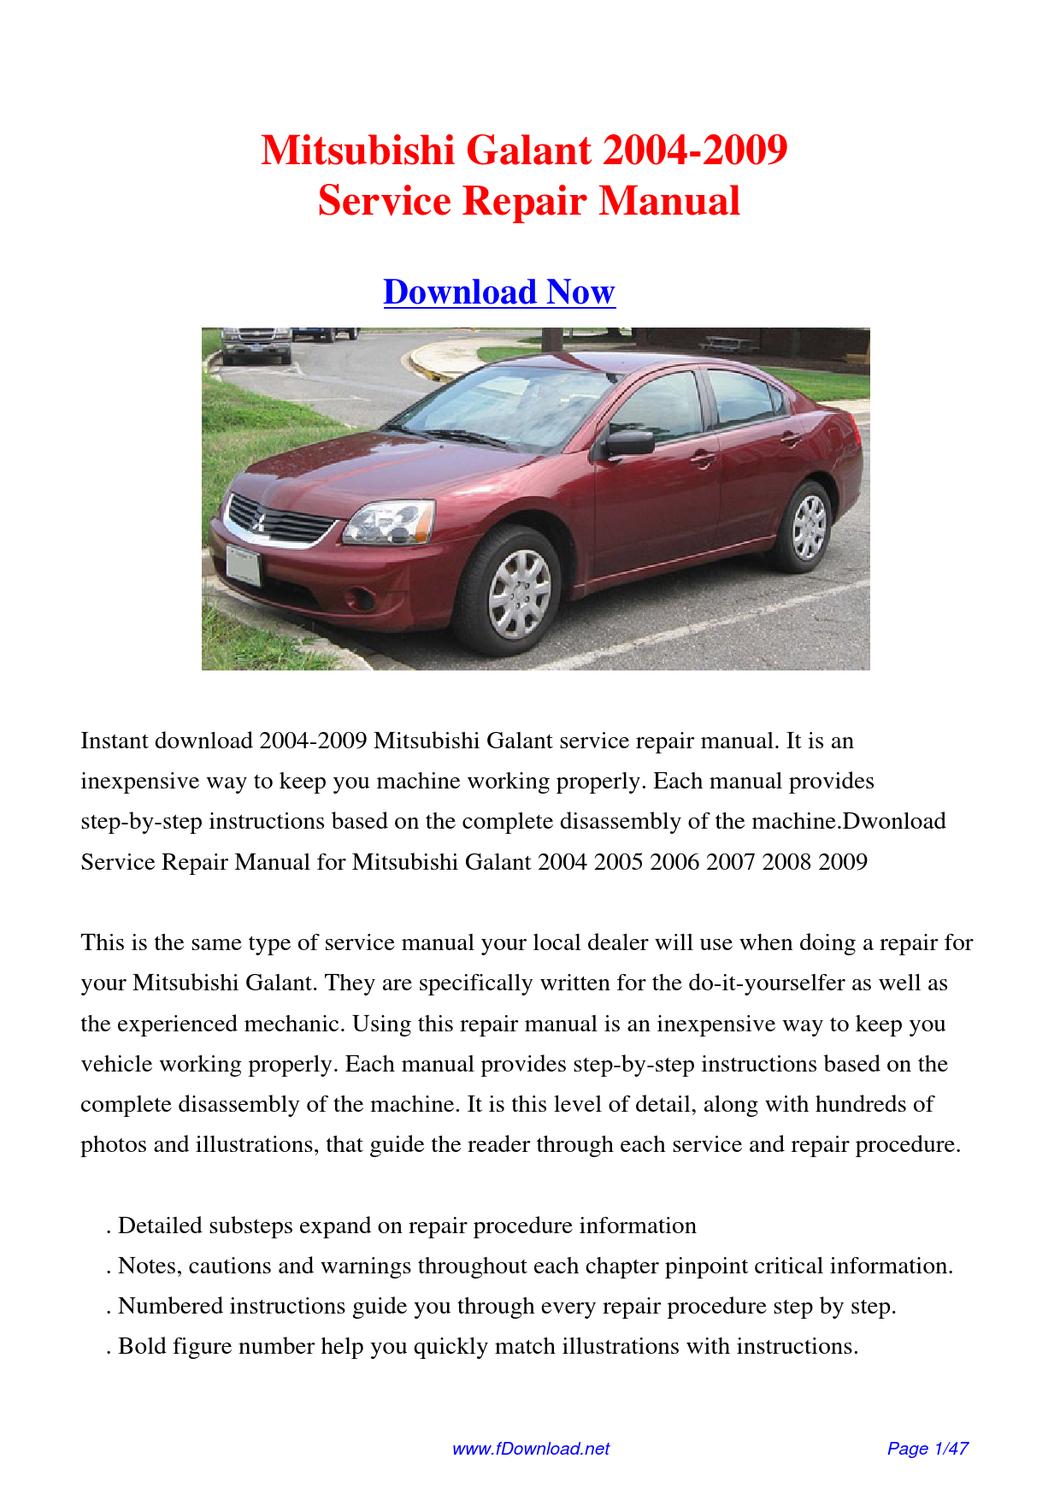 Mitsubishi Mirage Repair Manual Free Download